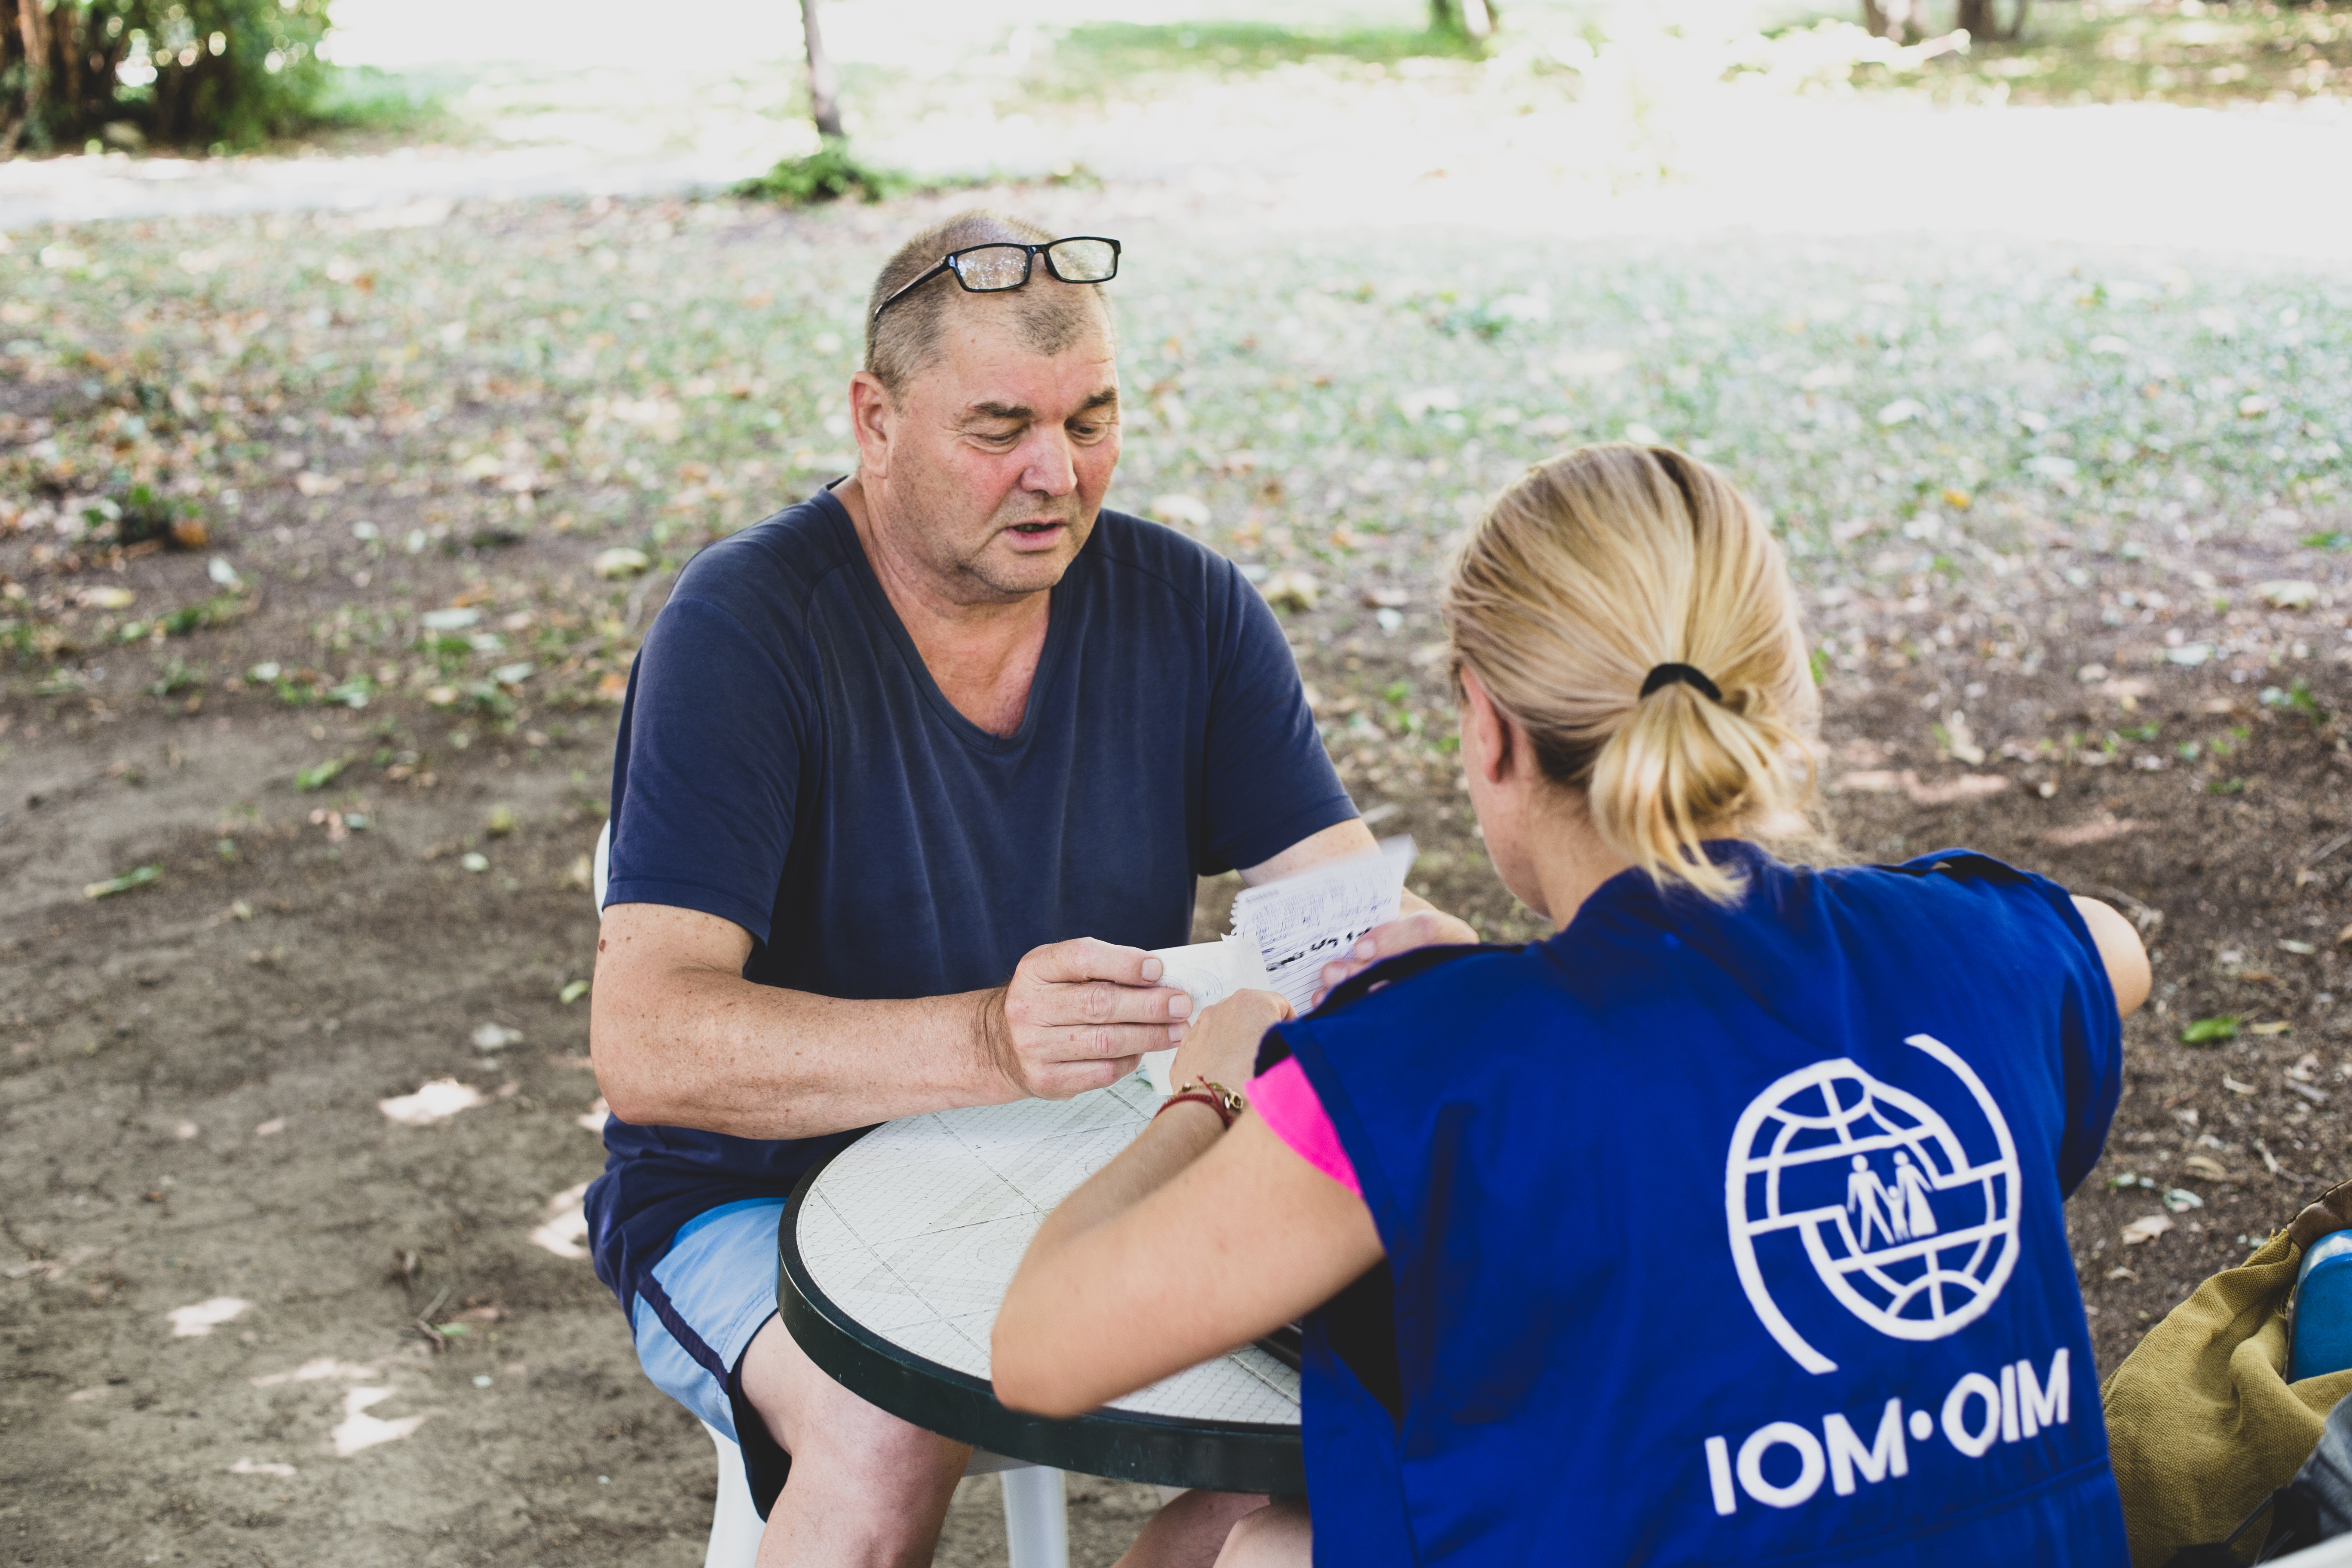 IOM staff assisting vulnerable individuals in Varna region